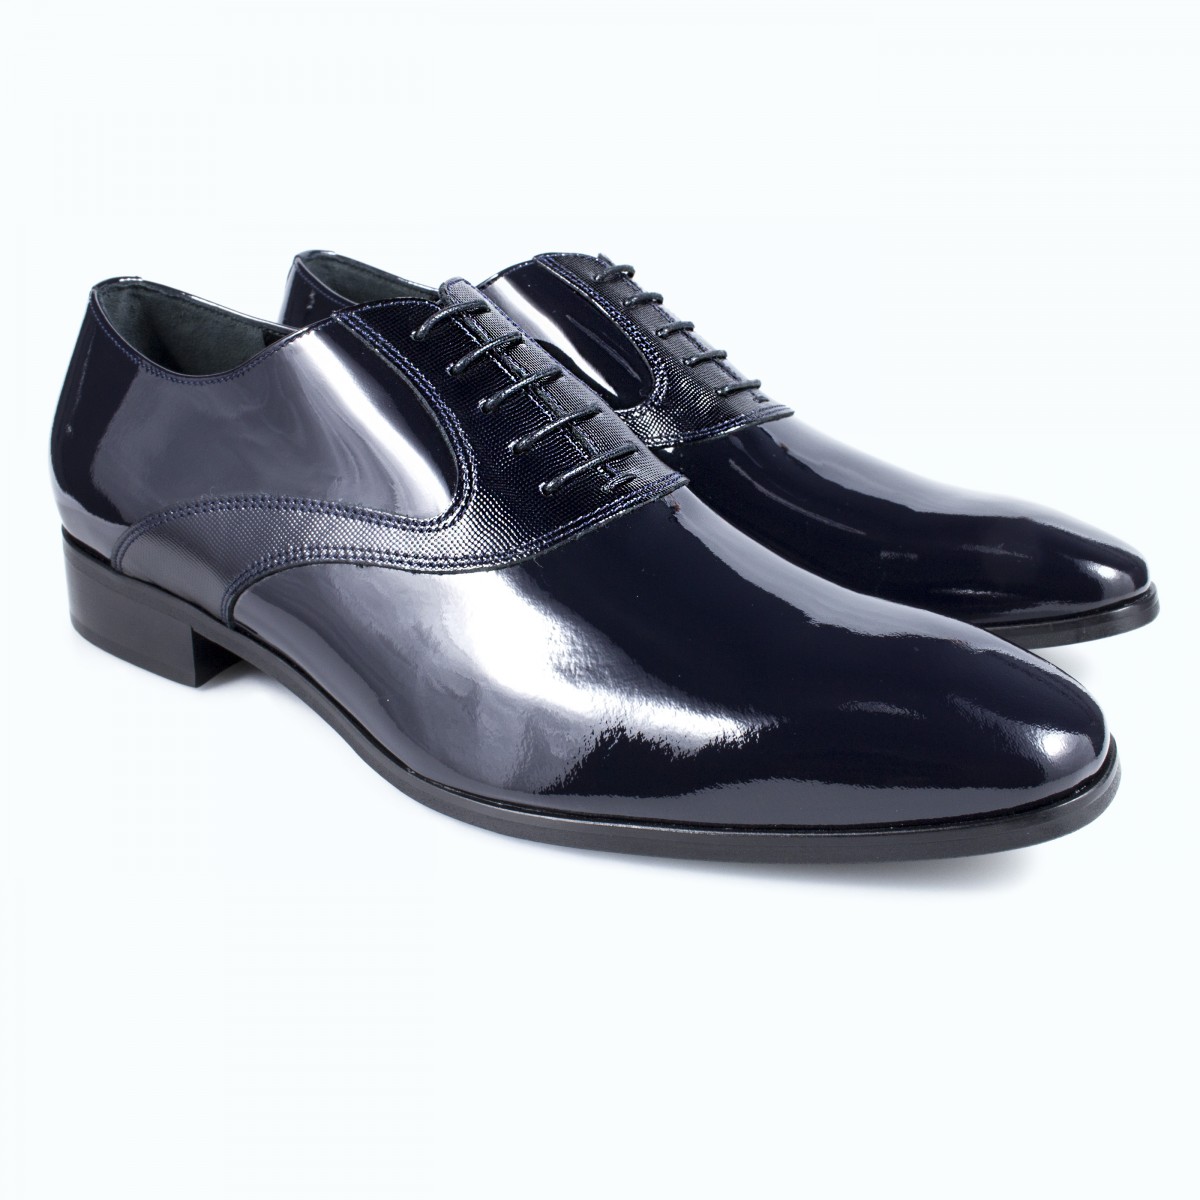 Scarpe eleganti da uomo, scarpe per sposo blu, scarpe cerimonia uomo